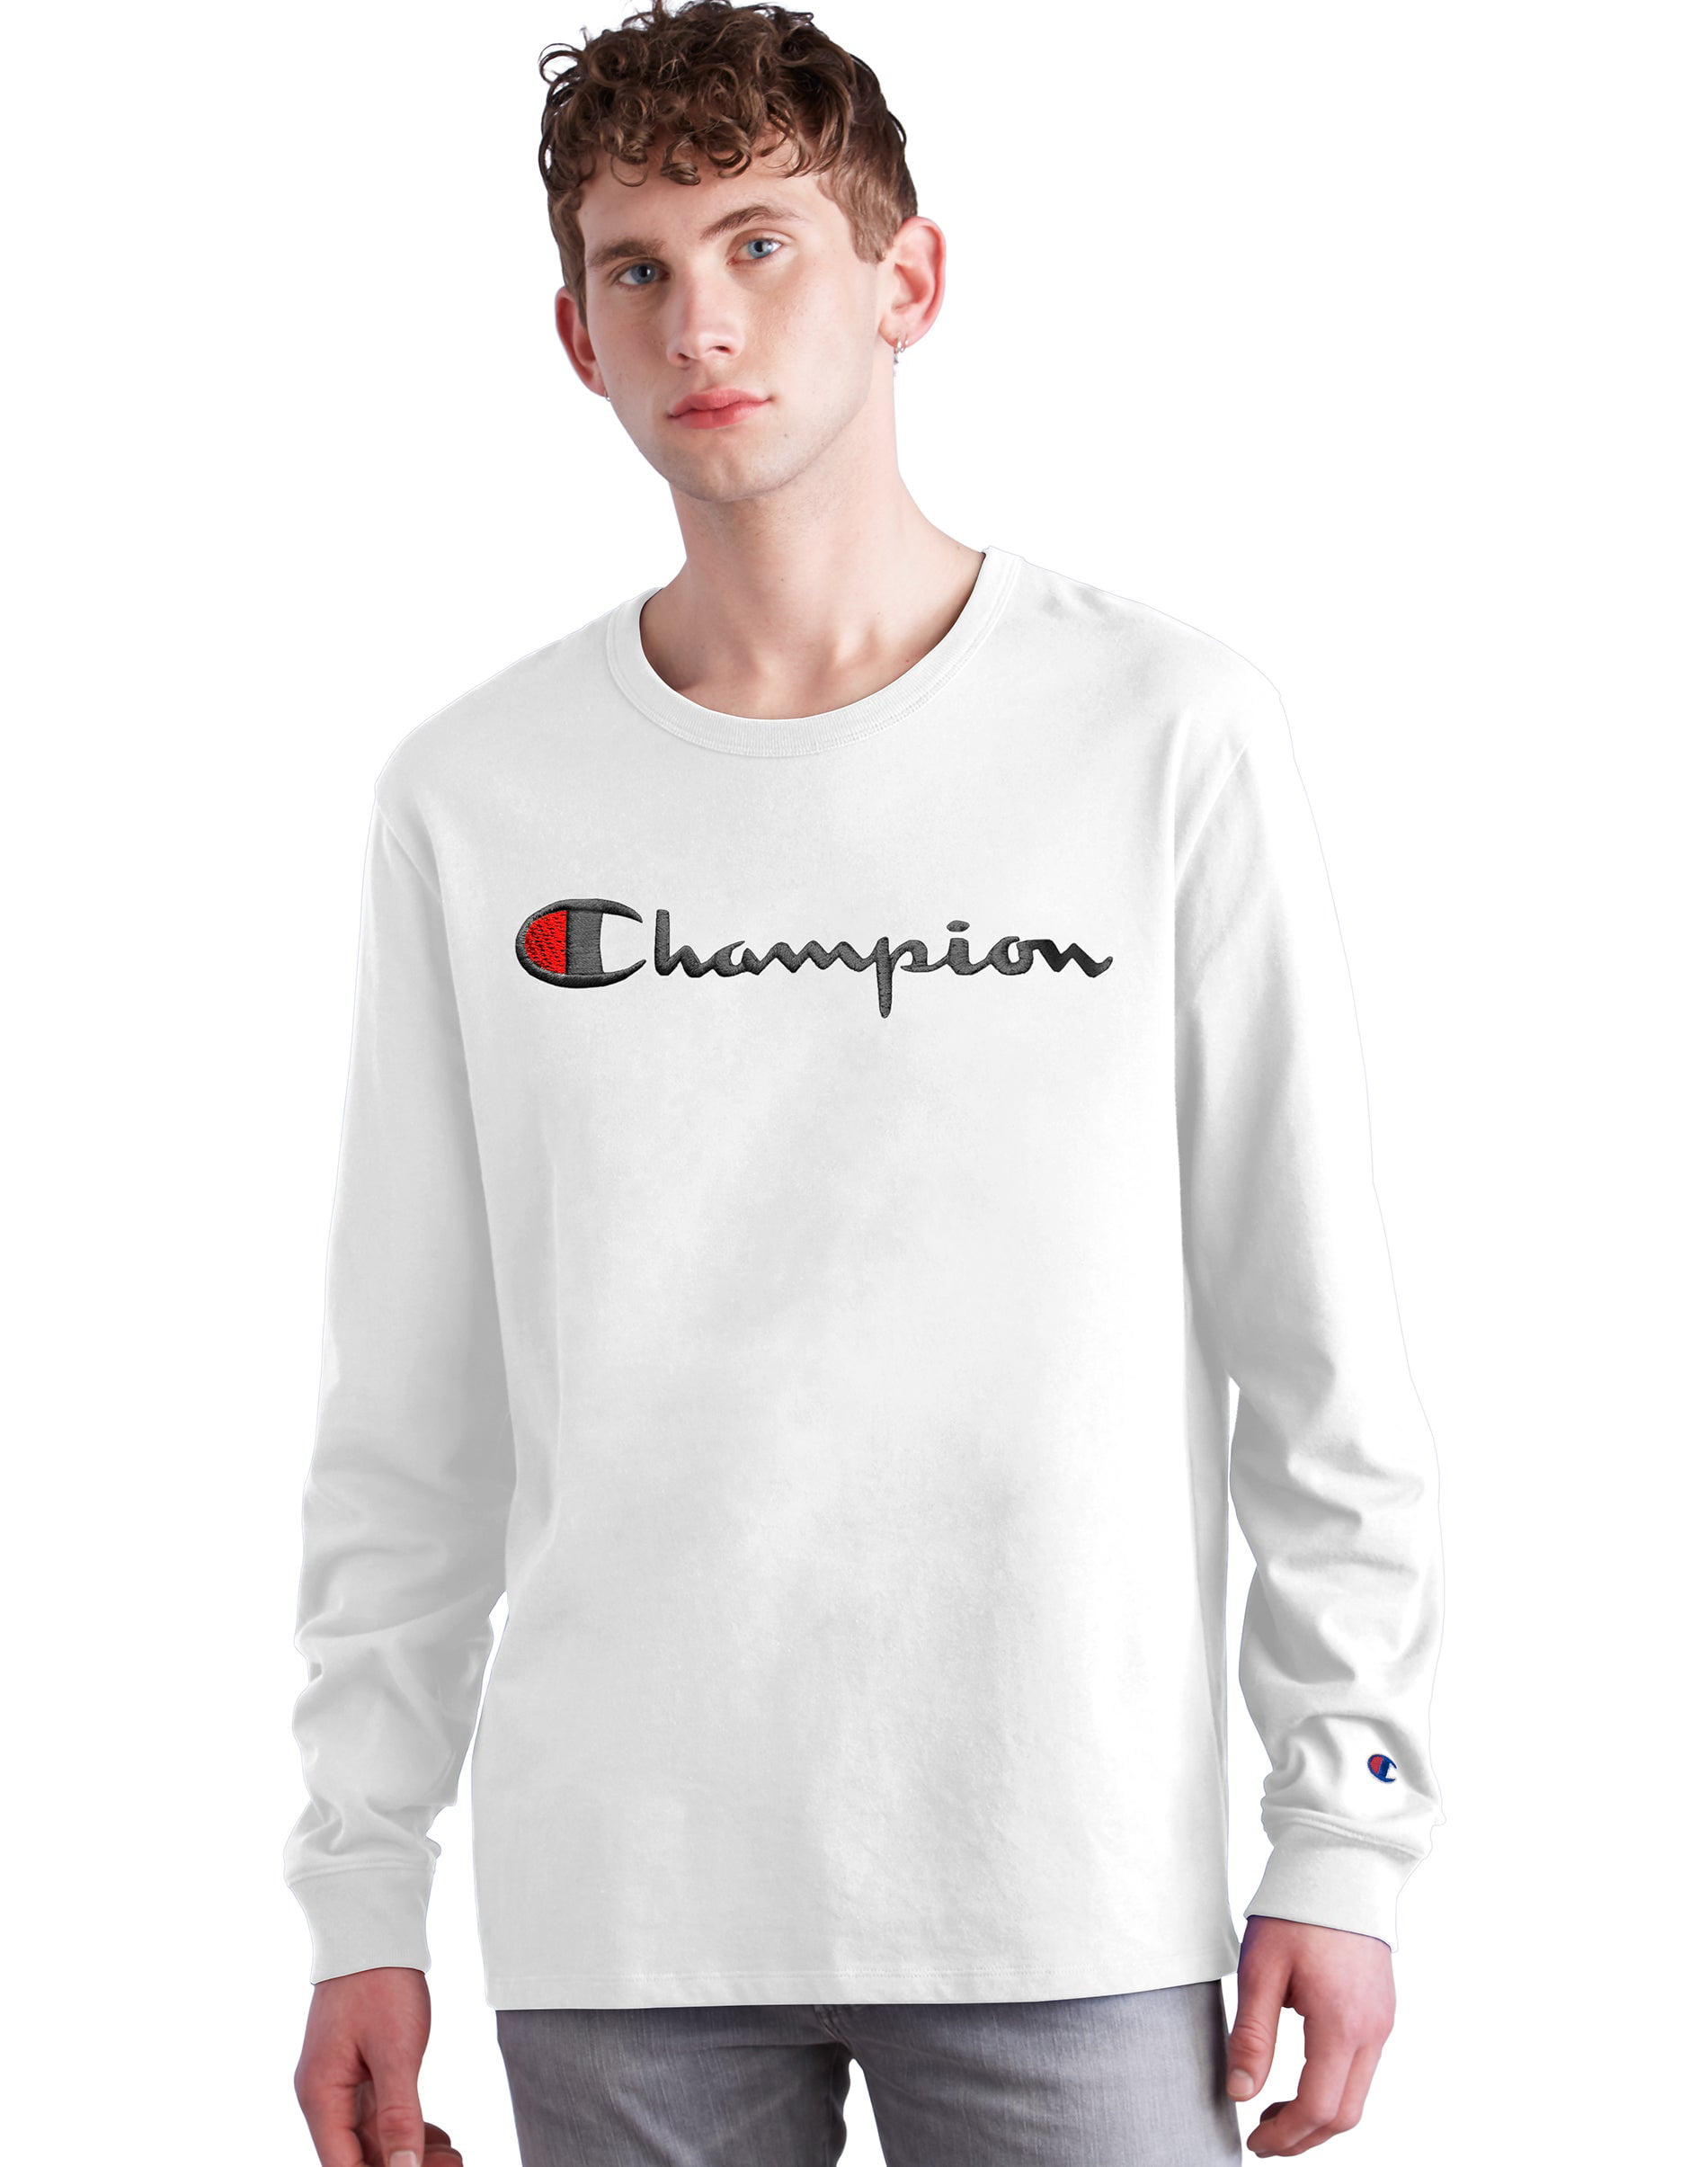 Swiss Rick Roll' Champion Unisex T-Shirt